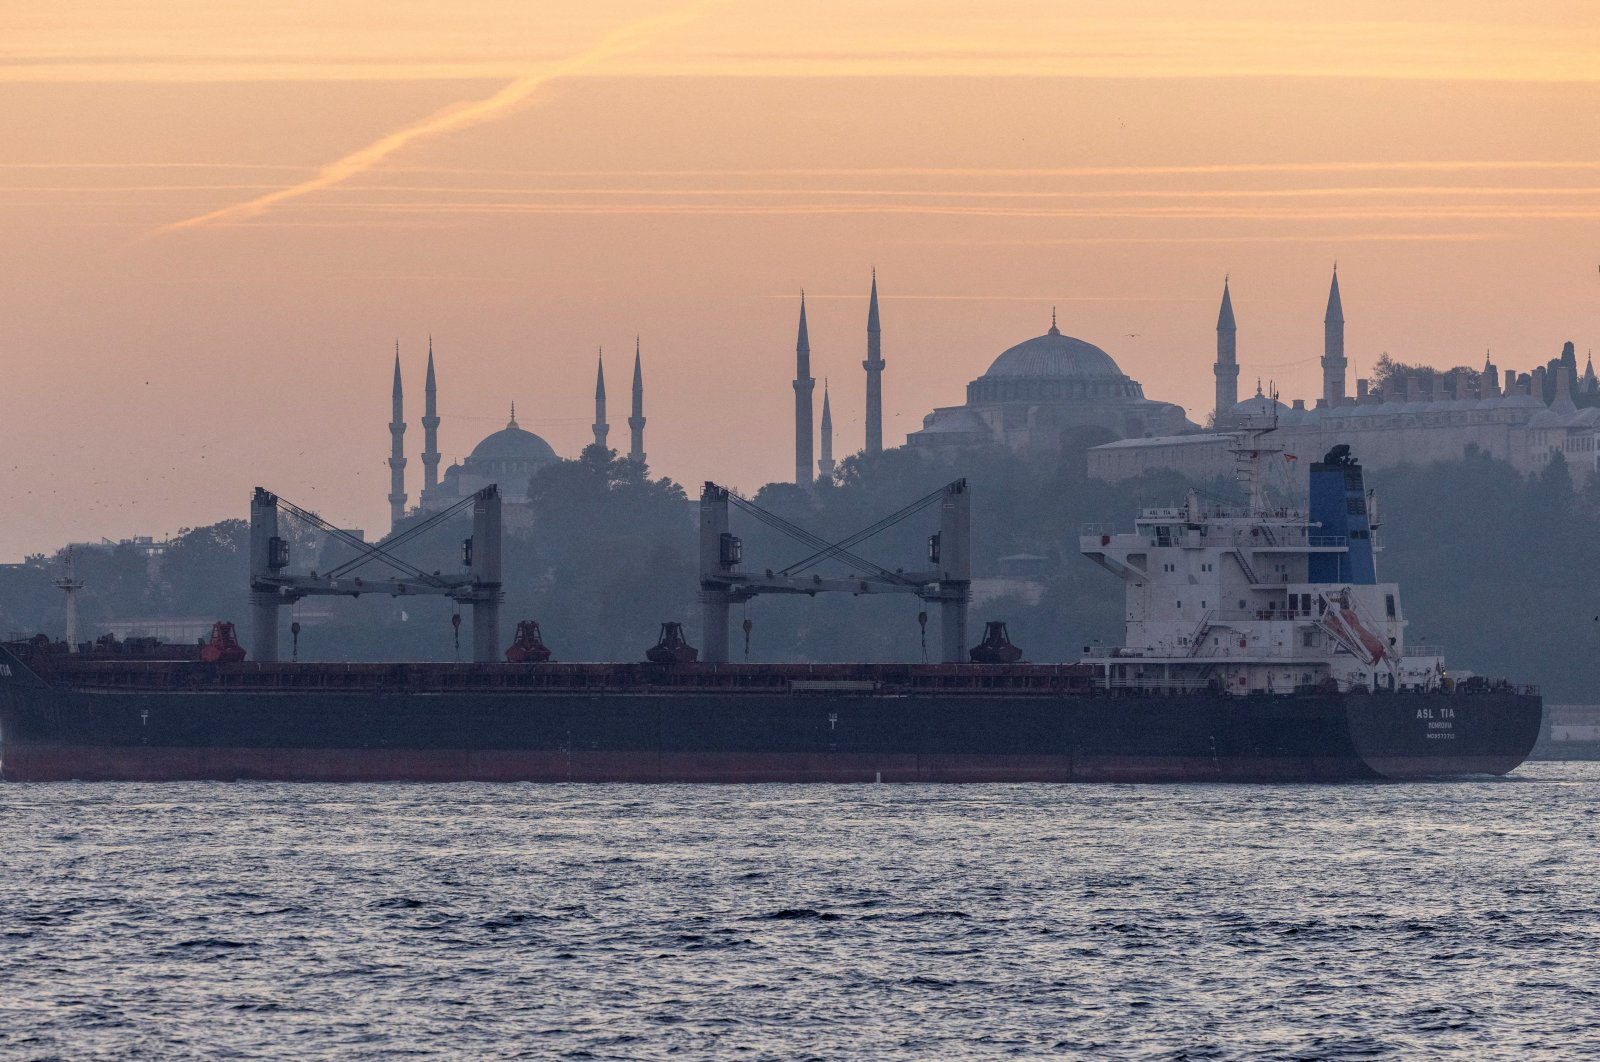 Asl Tia, a cargo vessel carrying Ukrainian grain, transits the Bosporus, in Istanbul, Türkiye, Nov. 2, 2022. (Reuters Photo)